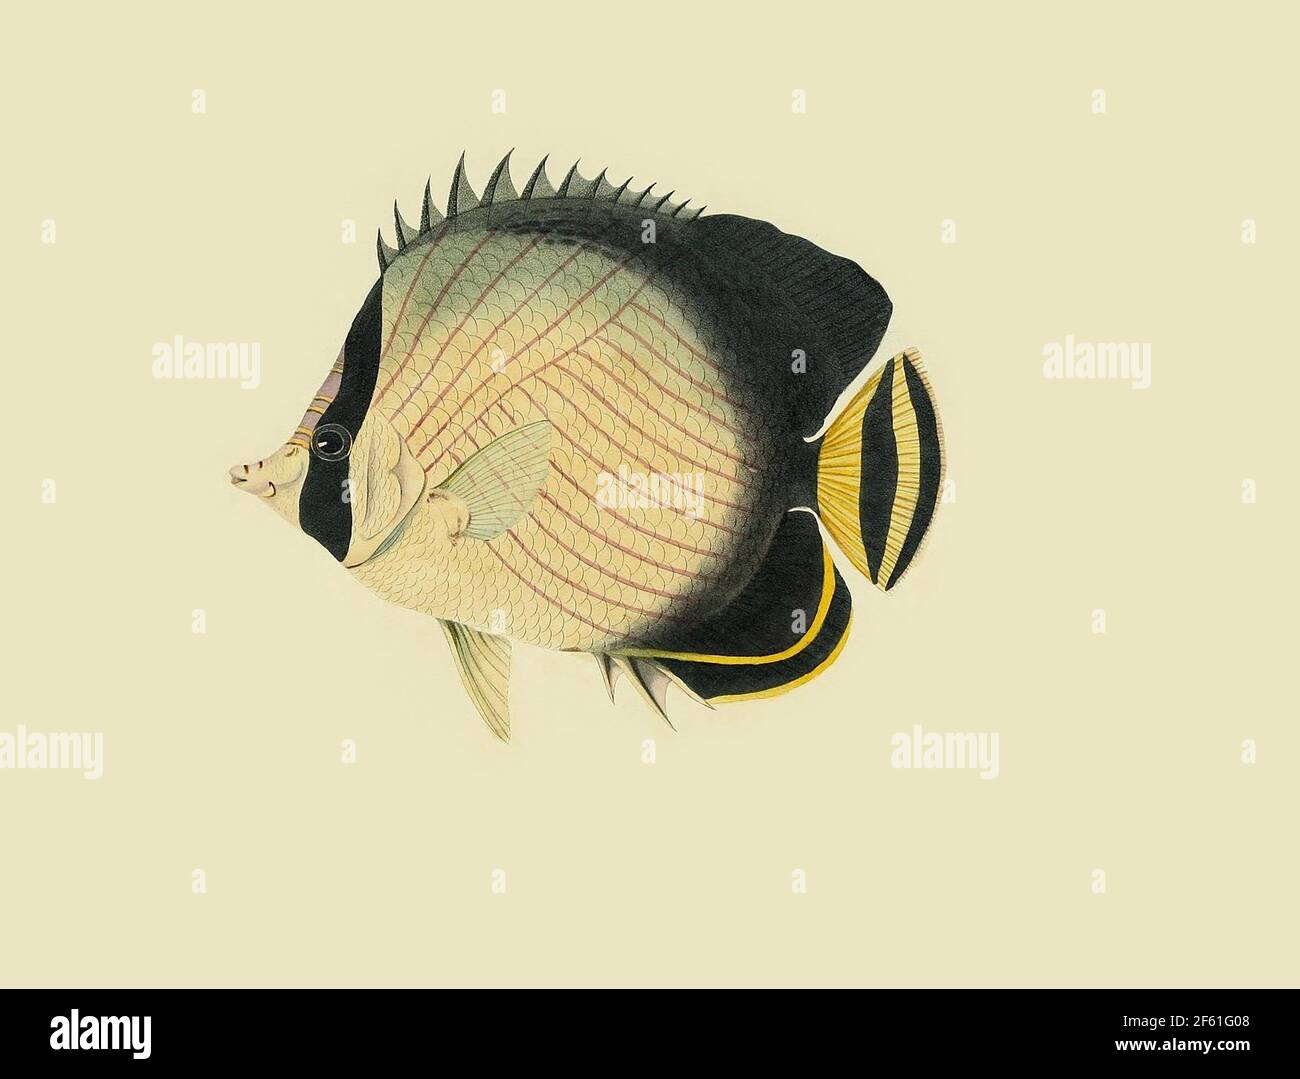 Illustration of the Vagabond butterflyfish Stock Photo